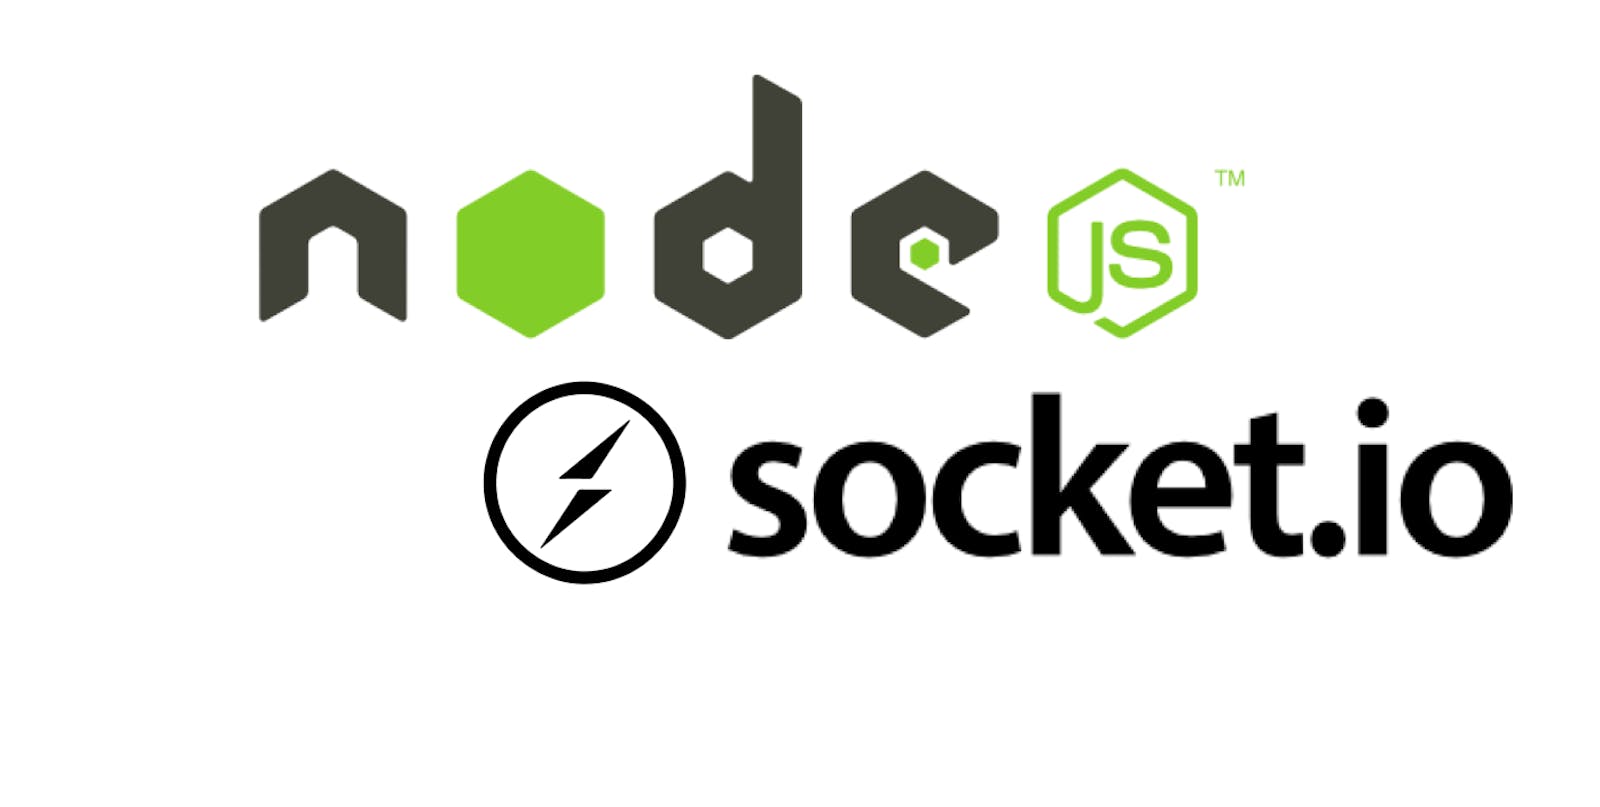 Building a real-time scalable chat app using  Socket.io, node js, Redis, Kafka, MongoDB, and react